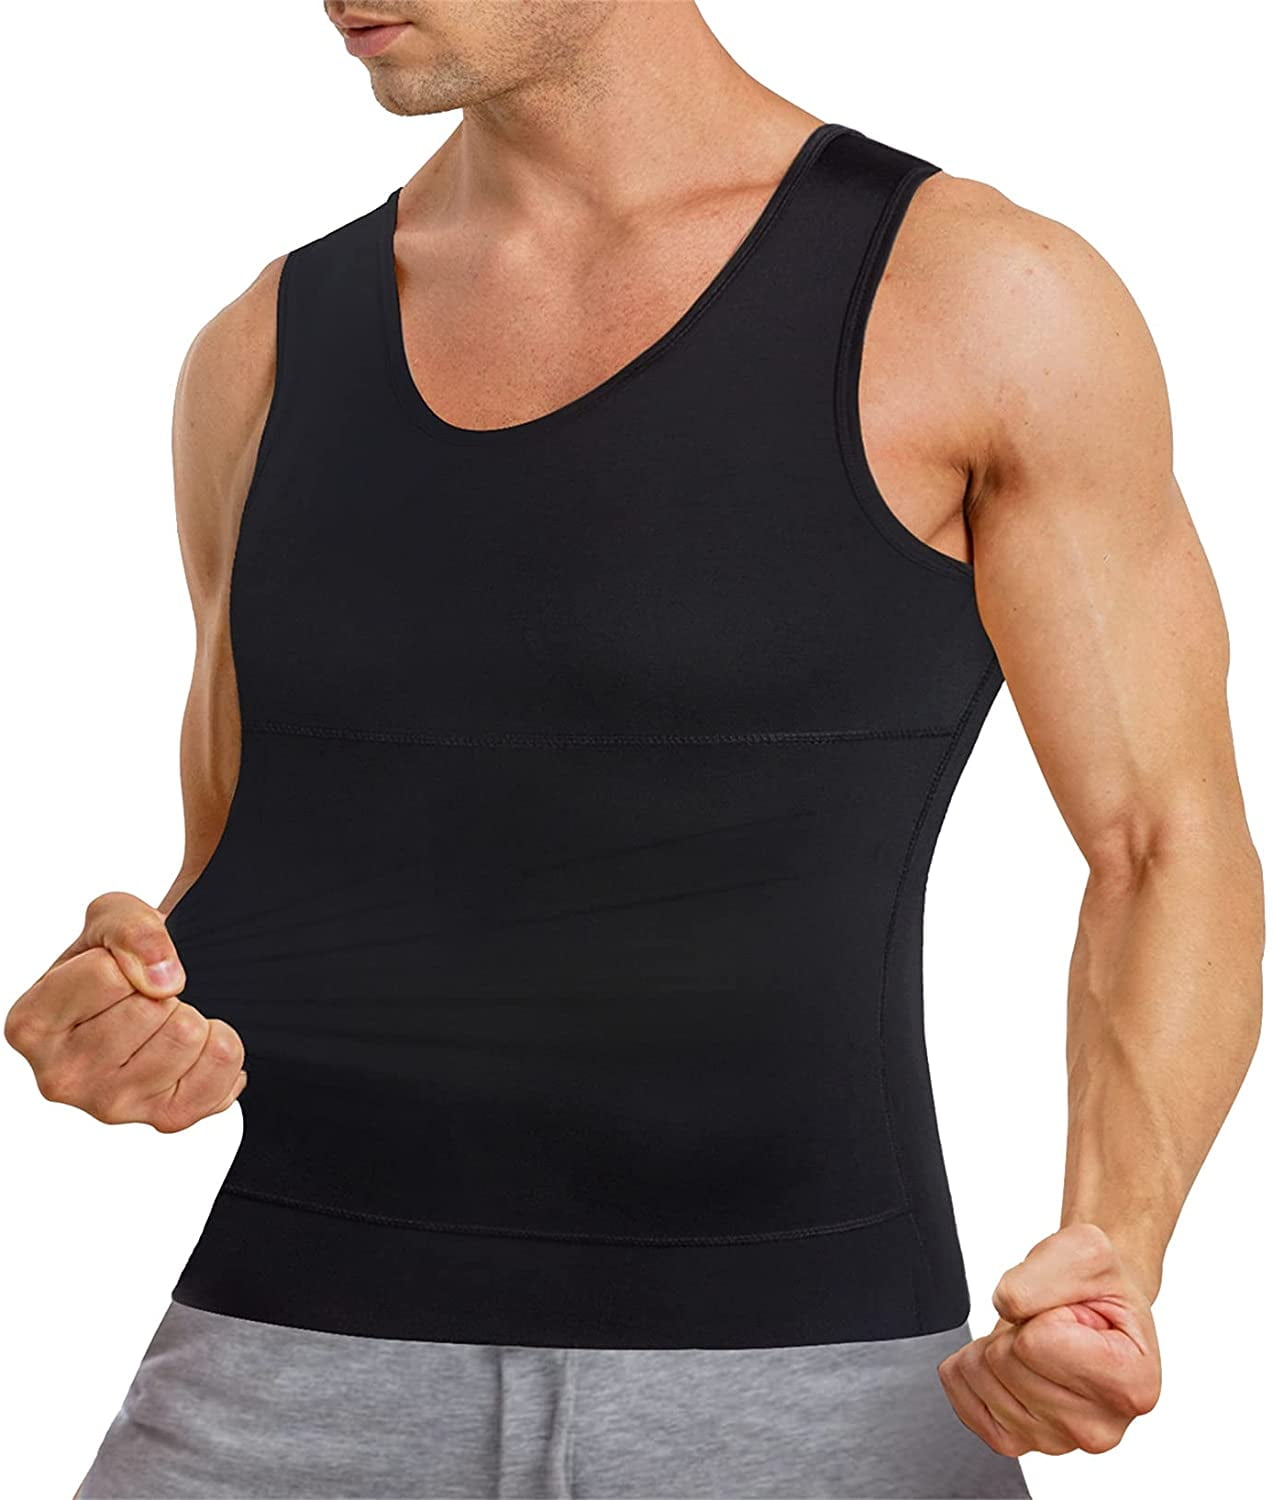 Gotoly Compression Shirt for Men Slimming Shaper Sport Vest Workout Tank Top Athletic Undershirt(Black XX-Large) - Walmart.com